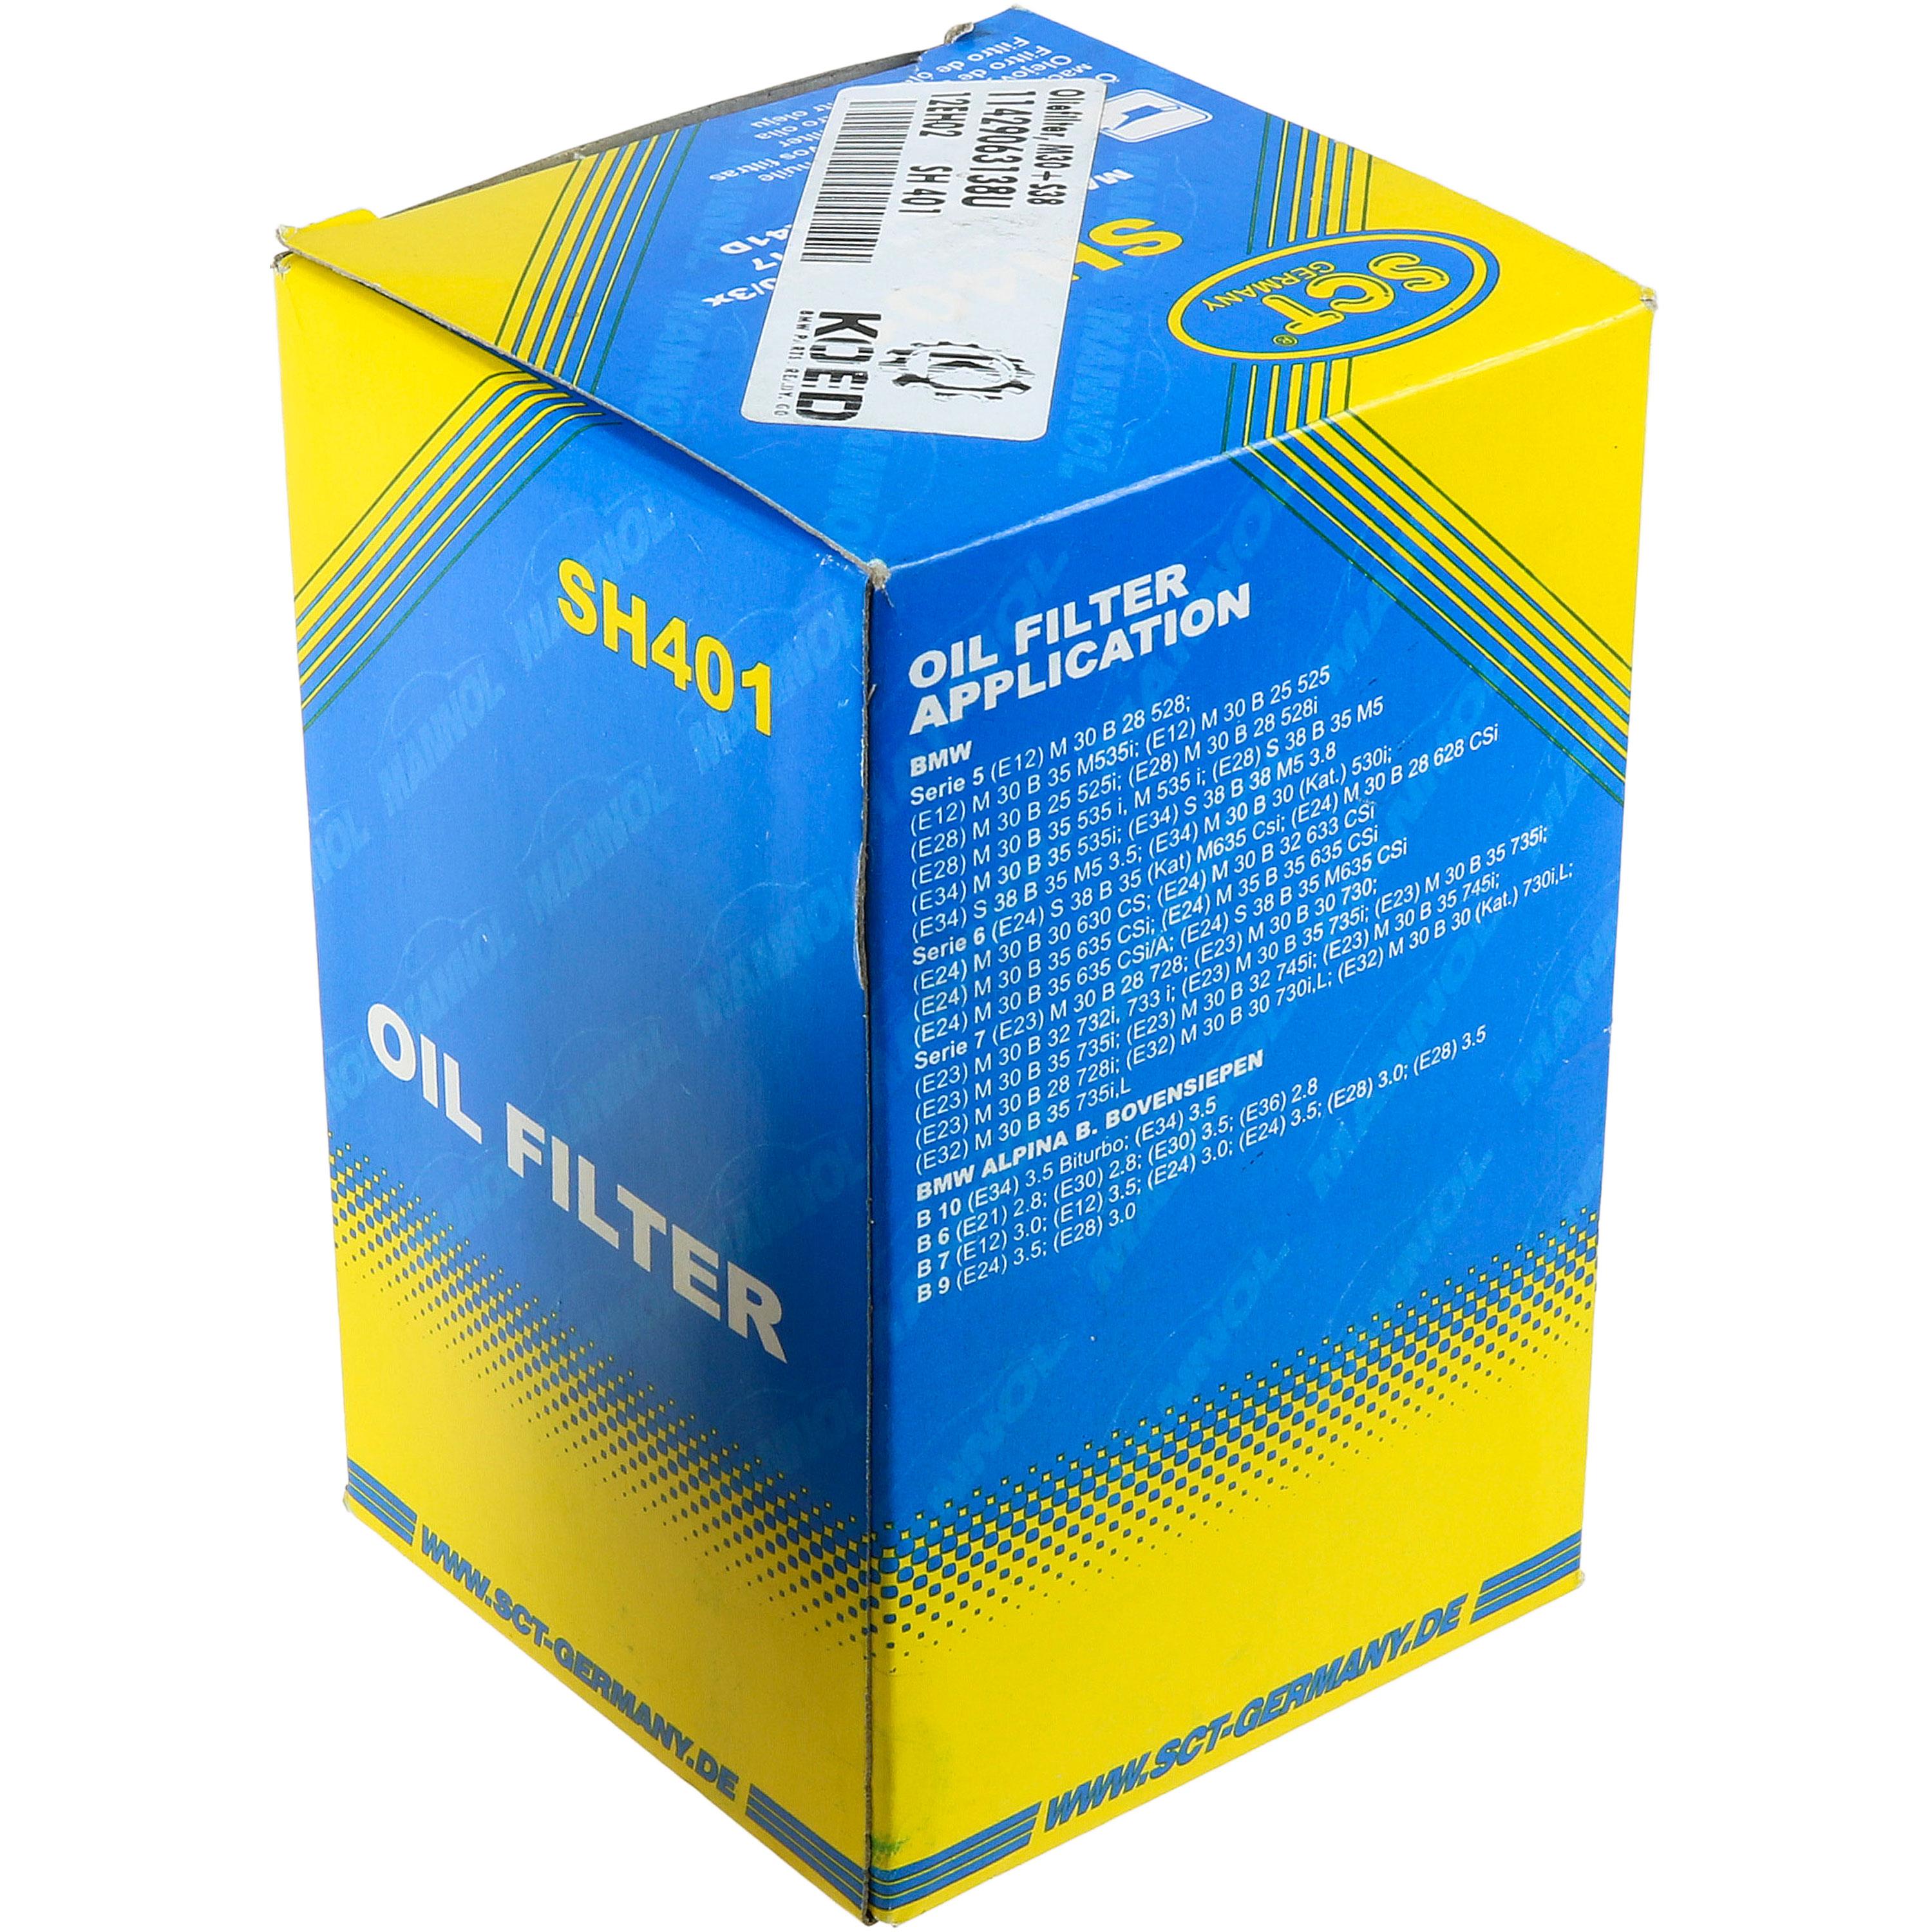 SCT Ölfilter SH 401 Oil Filter